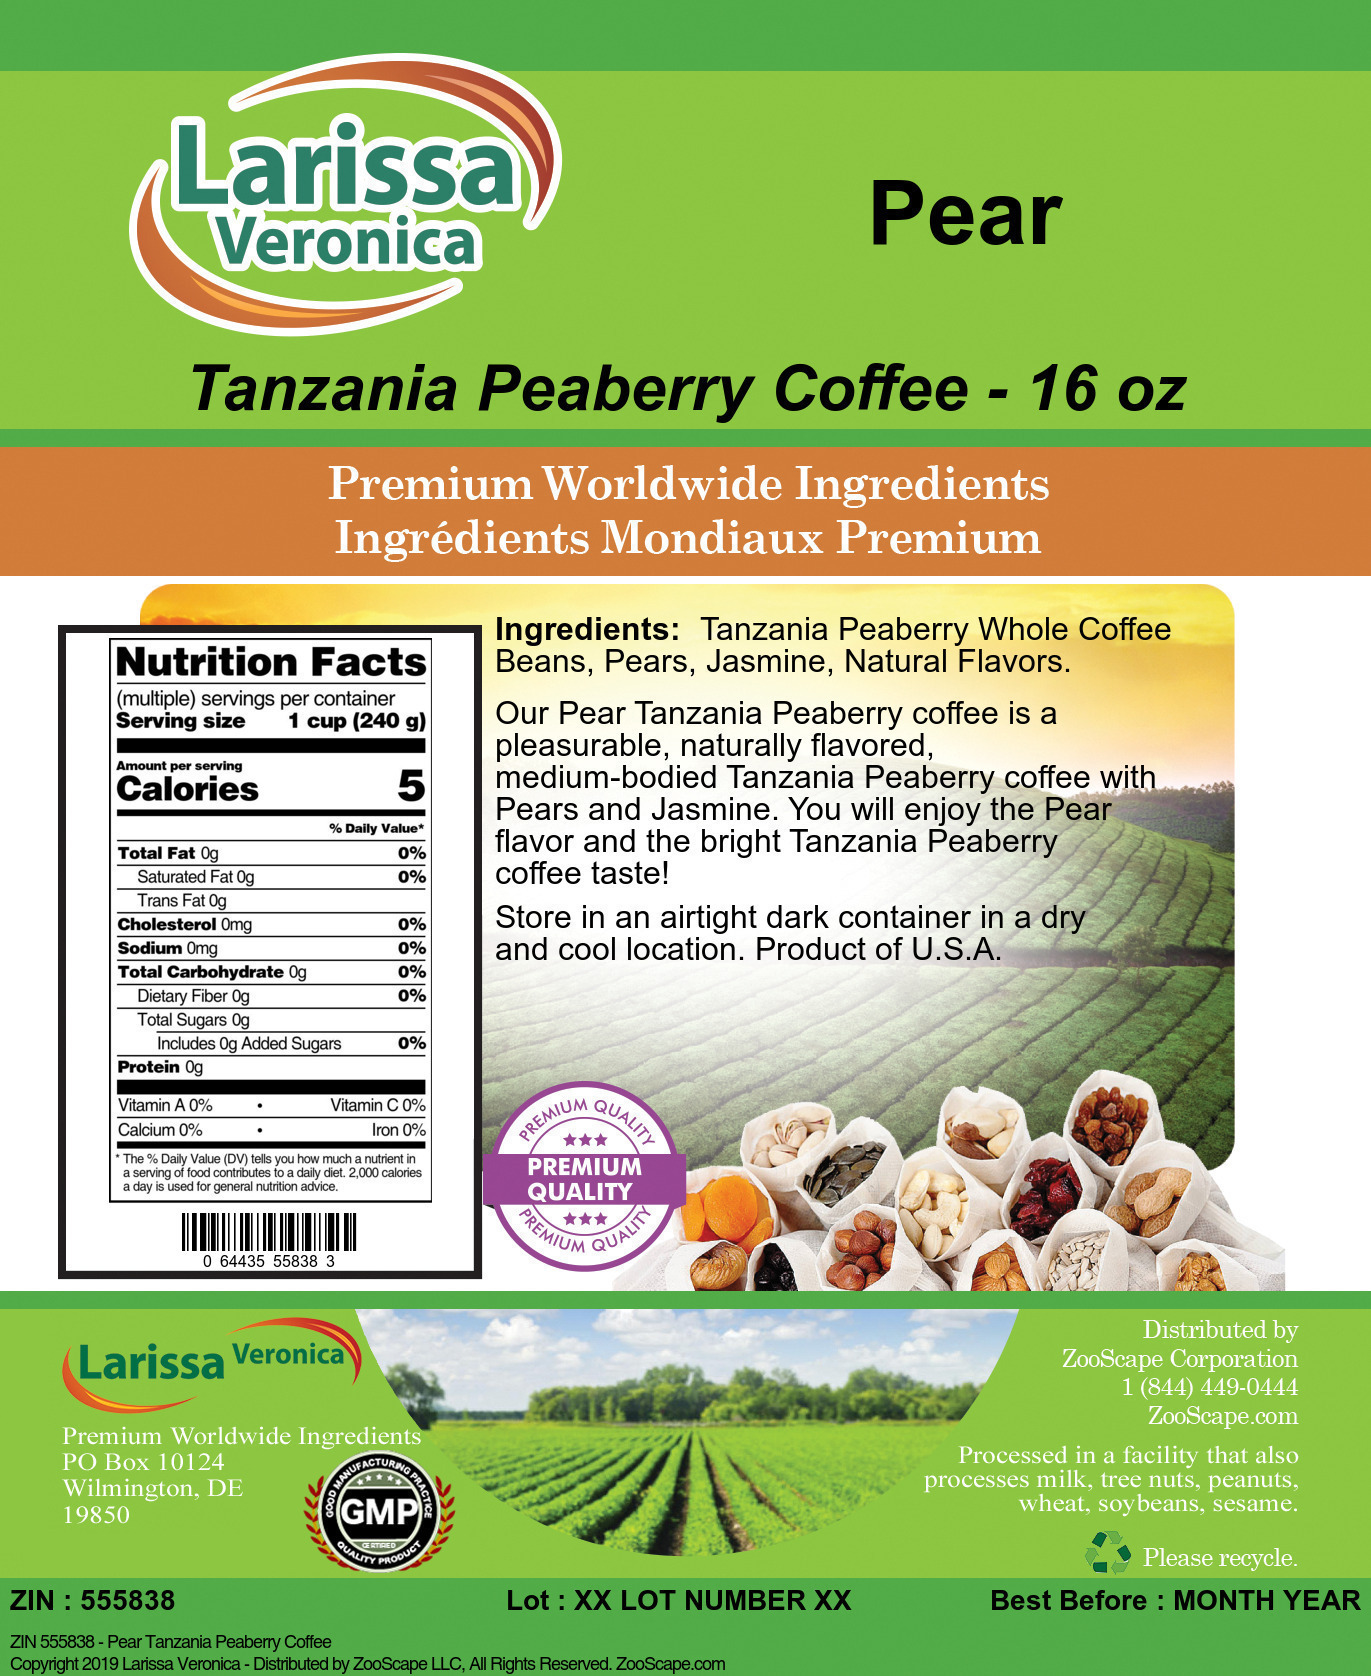 Pear Tanzania Peaberry Coffee - Label